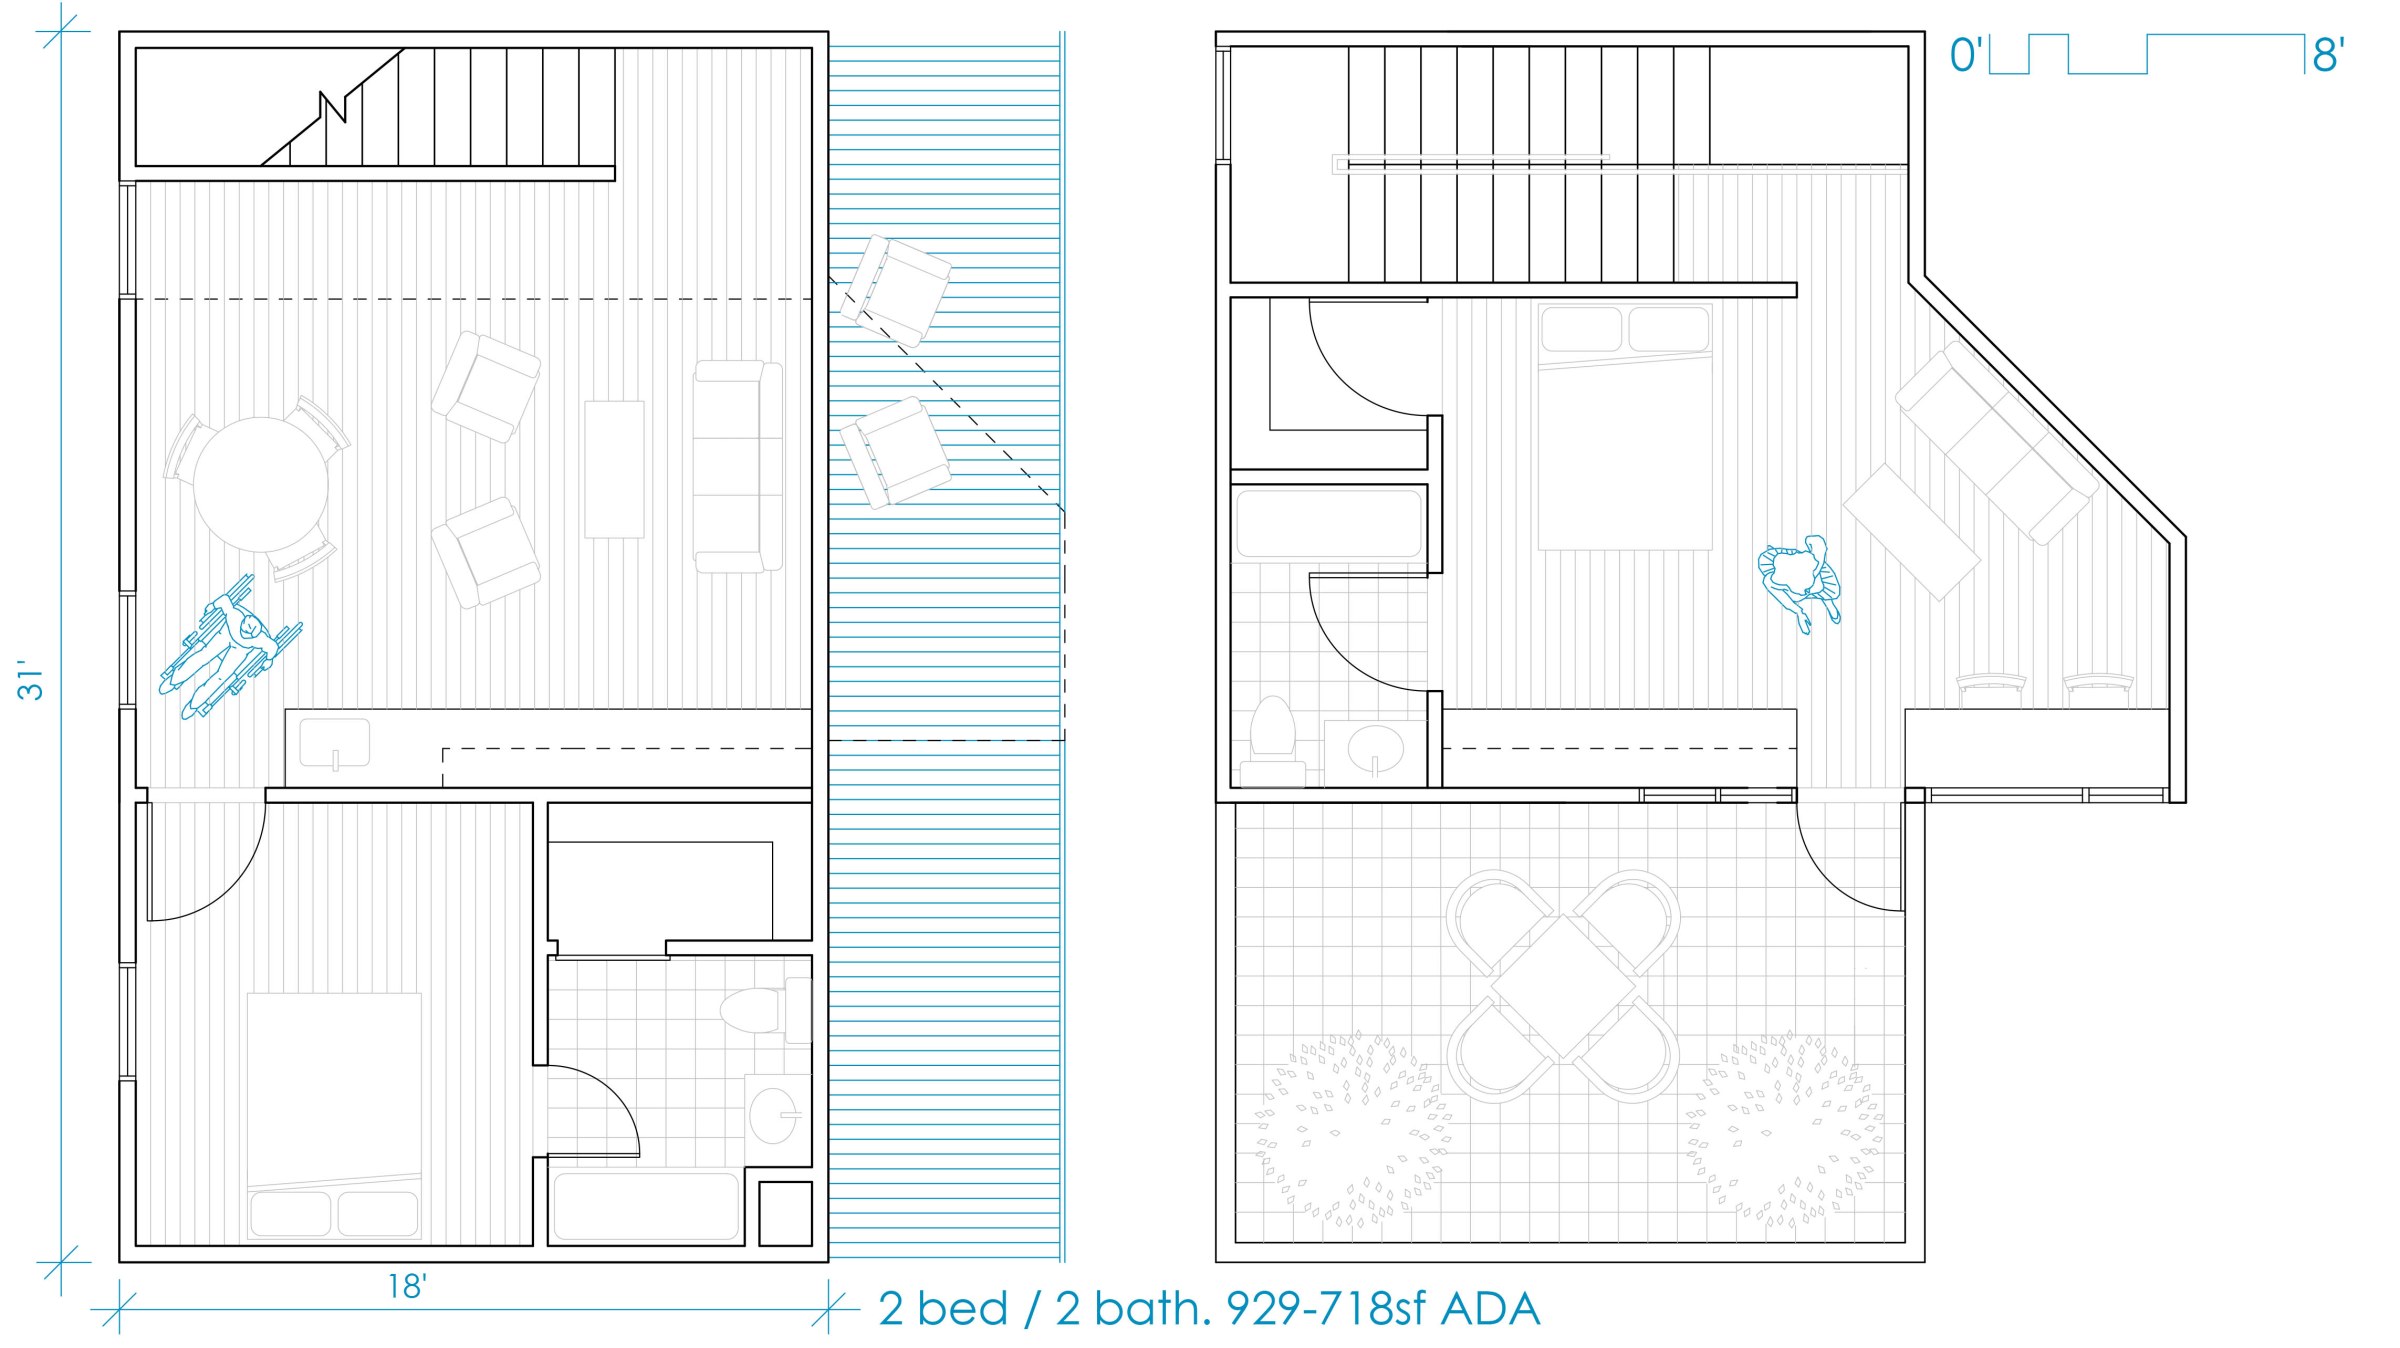 Daniel Tighe's thesis project: 2 bedroom 2 bathroom floor plan, ADA 